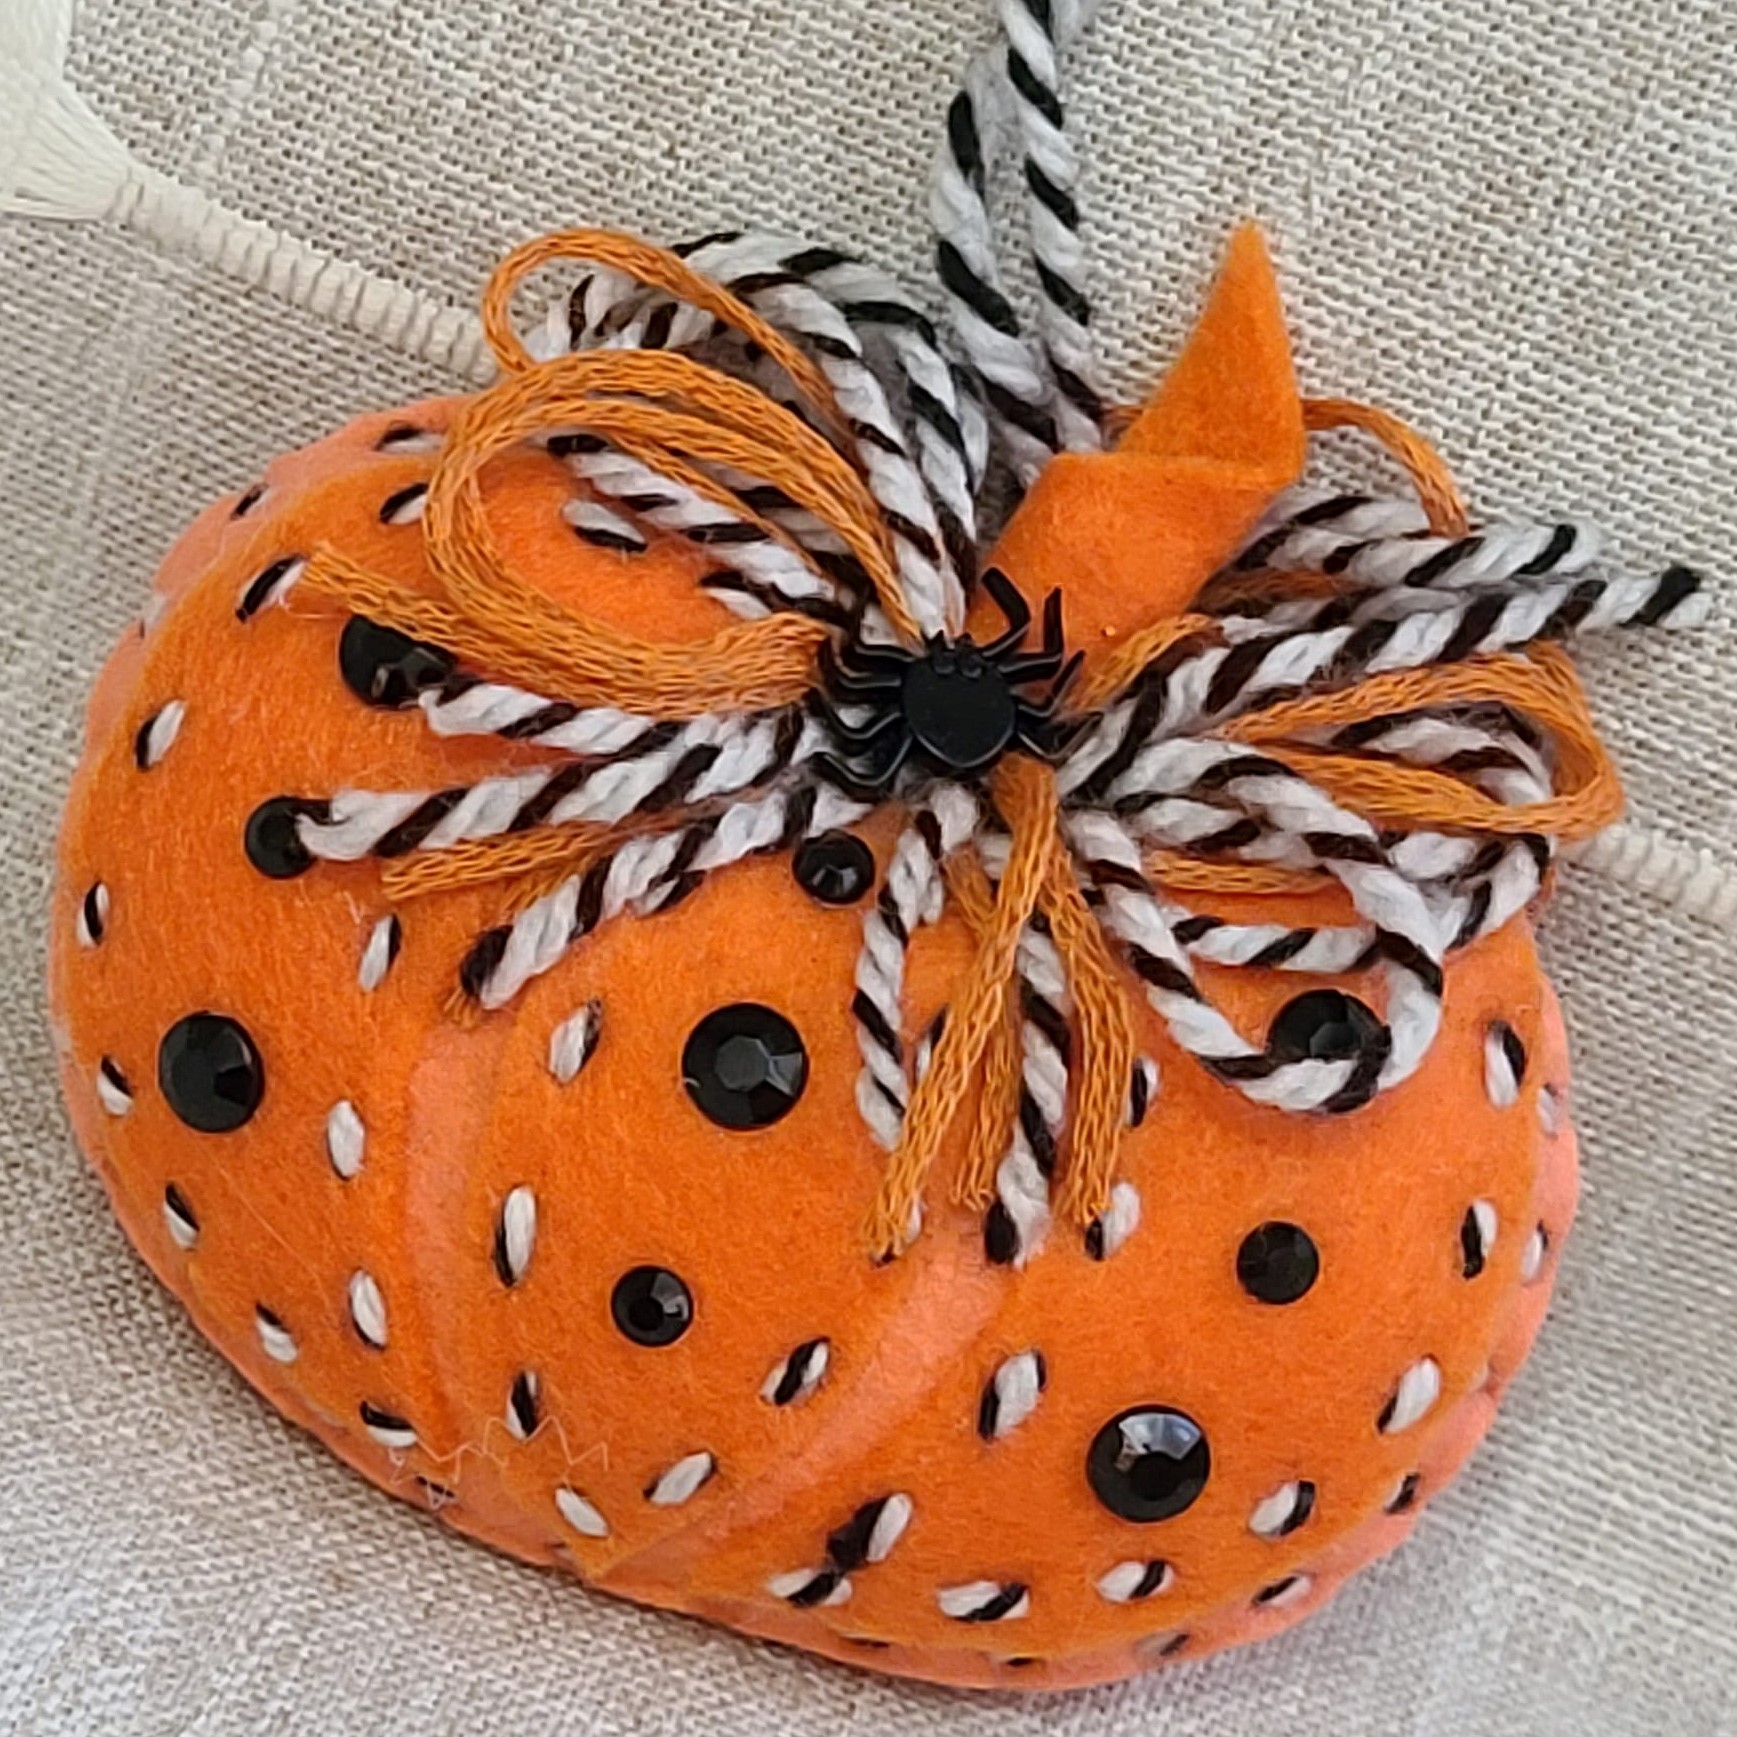 Felt pumpkin ornament - orange with black and white